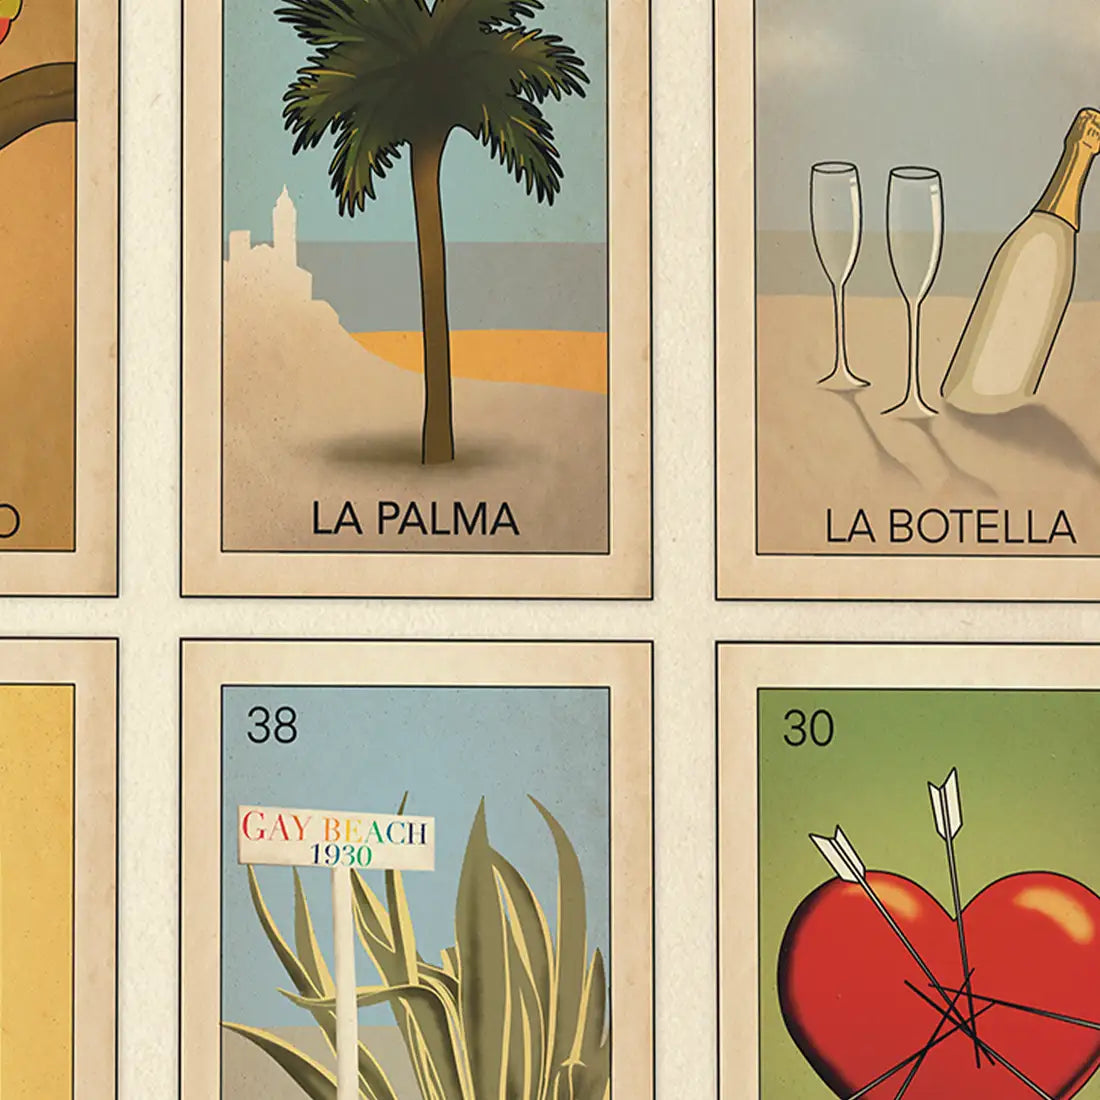 Close-up of 'Loteria Sitgetana Verano' poster, showing detailed illustrations of the Sitges-themed Loteria cards including La Palma, La Botella, and El Nopal